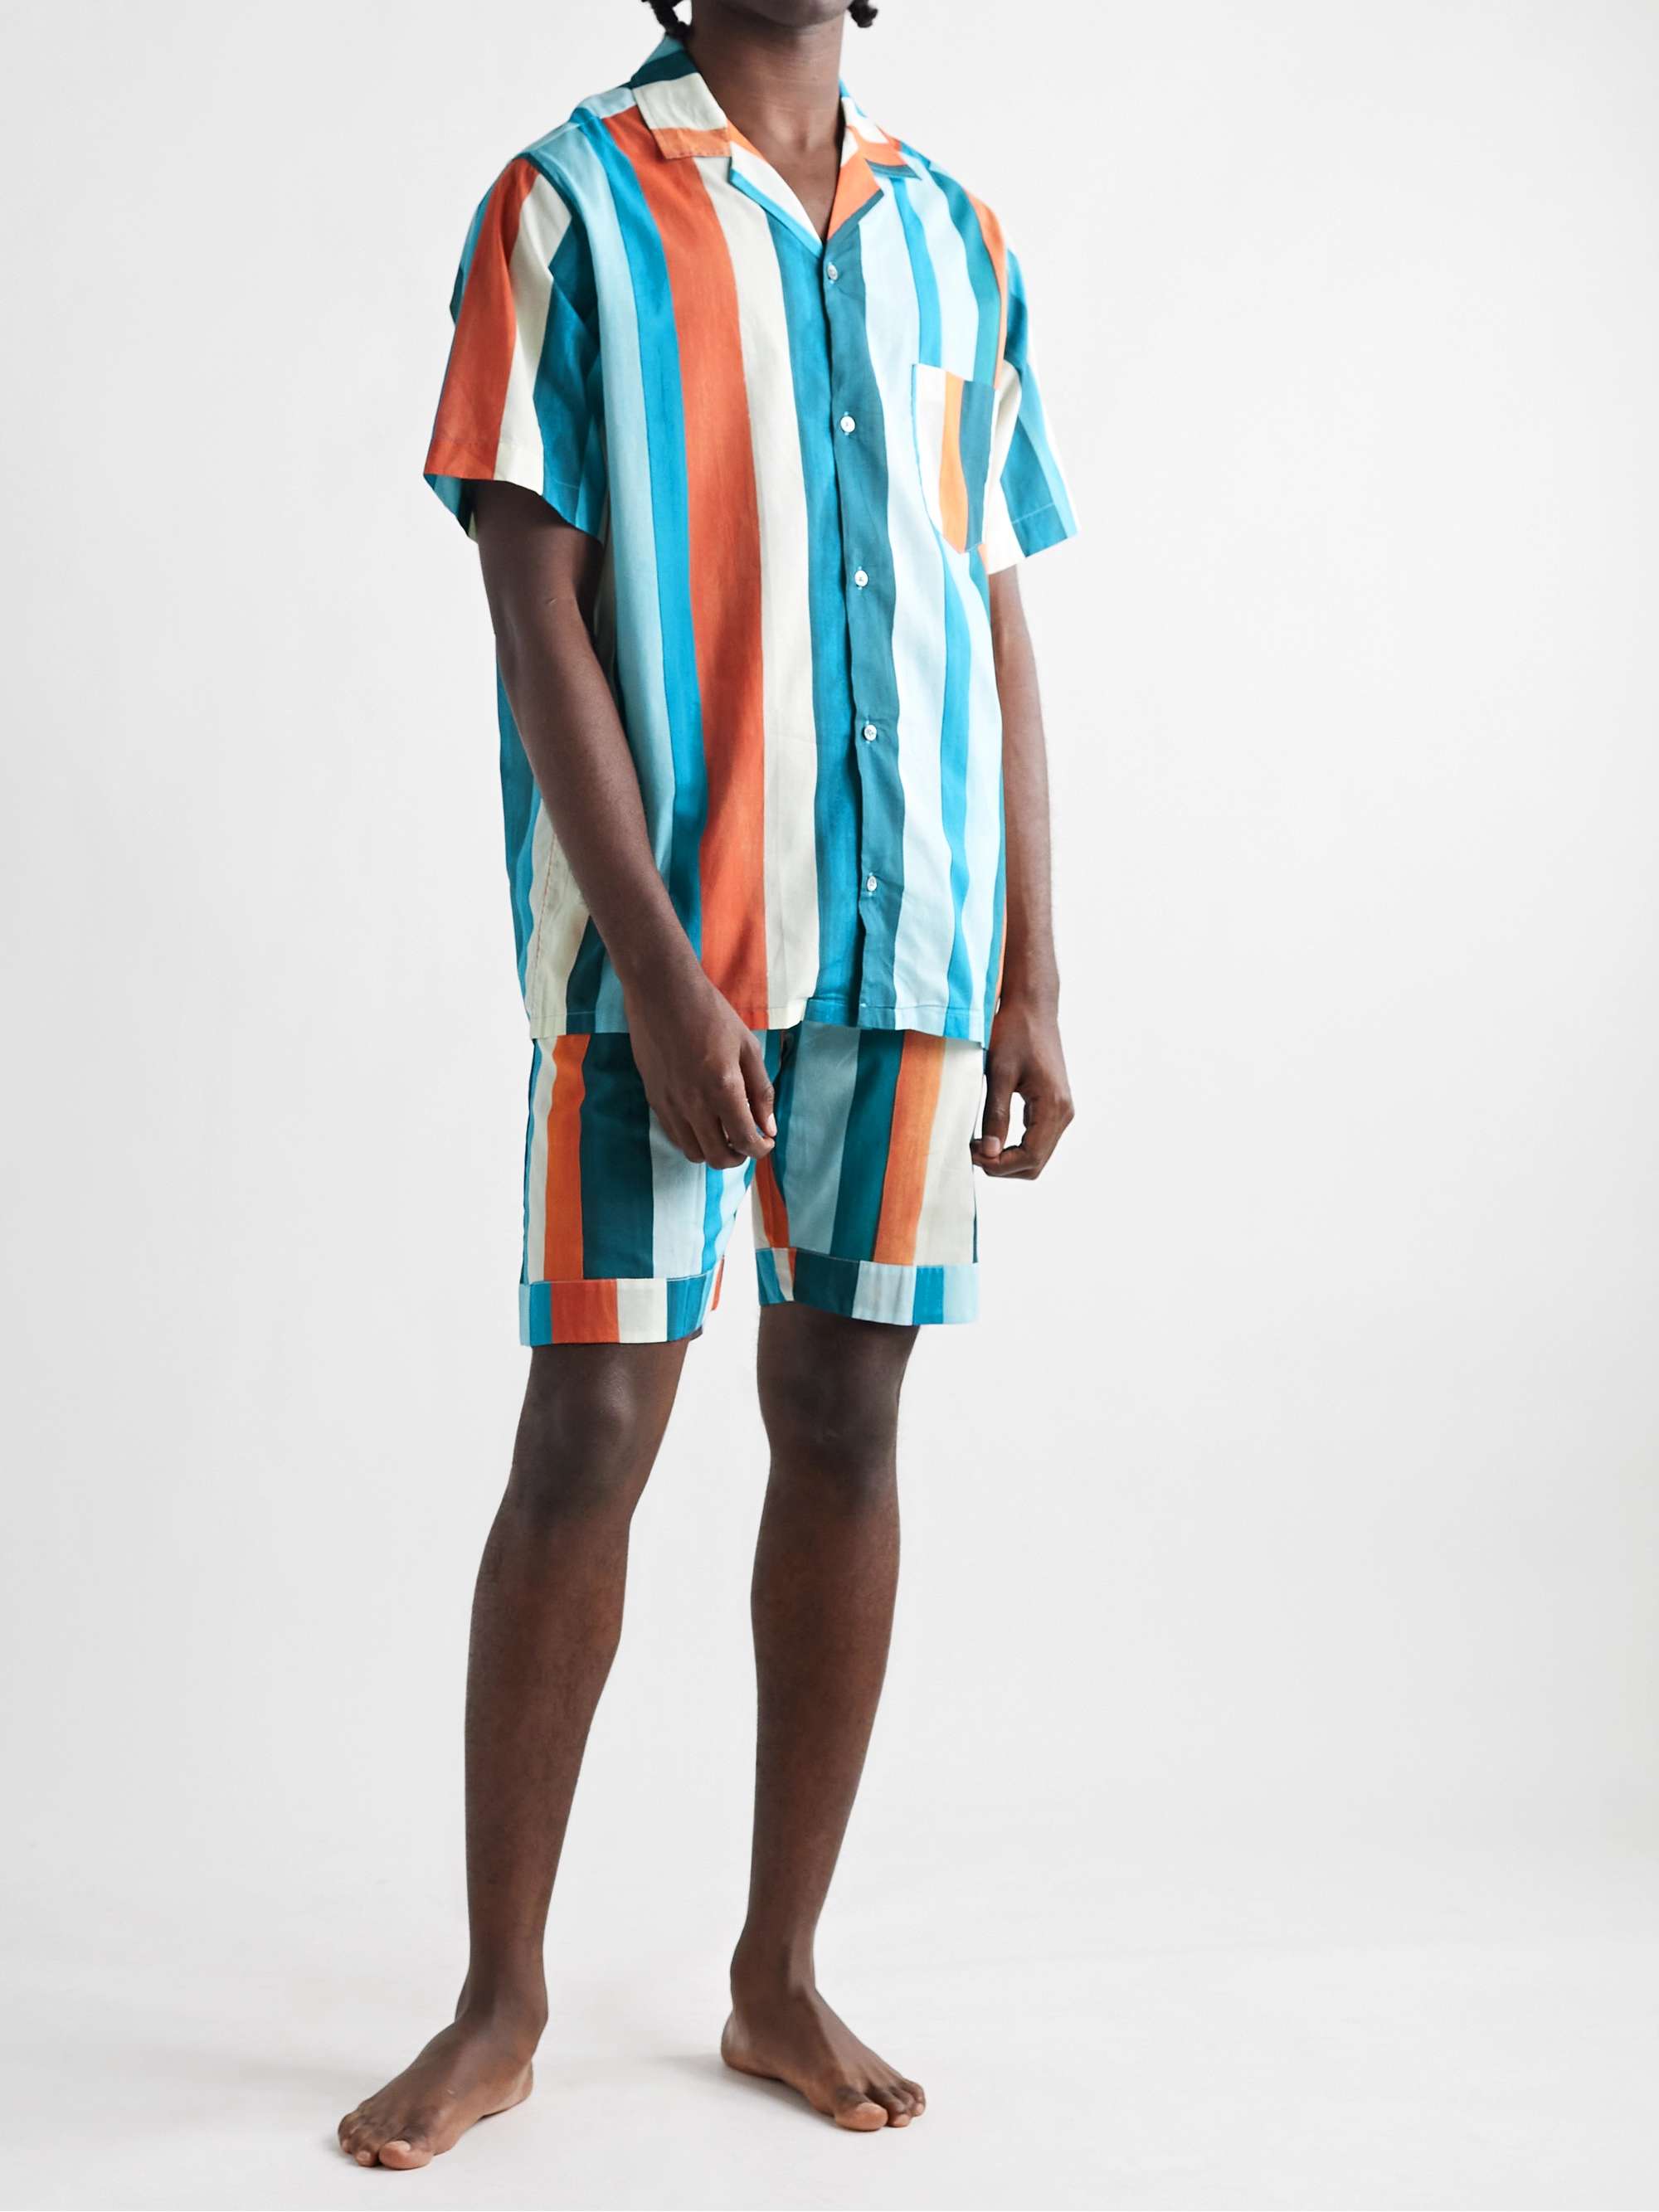 DESMOND & DEMPSEY Striped Cotton Pyjama Shorts | MR PORTER